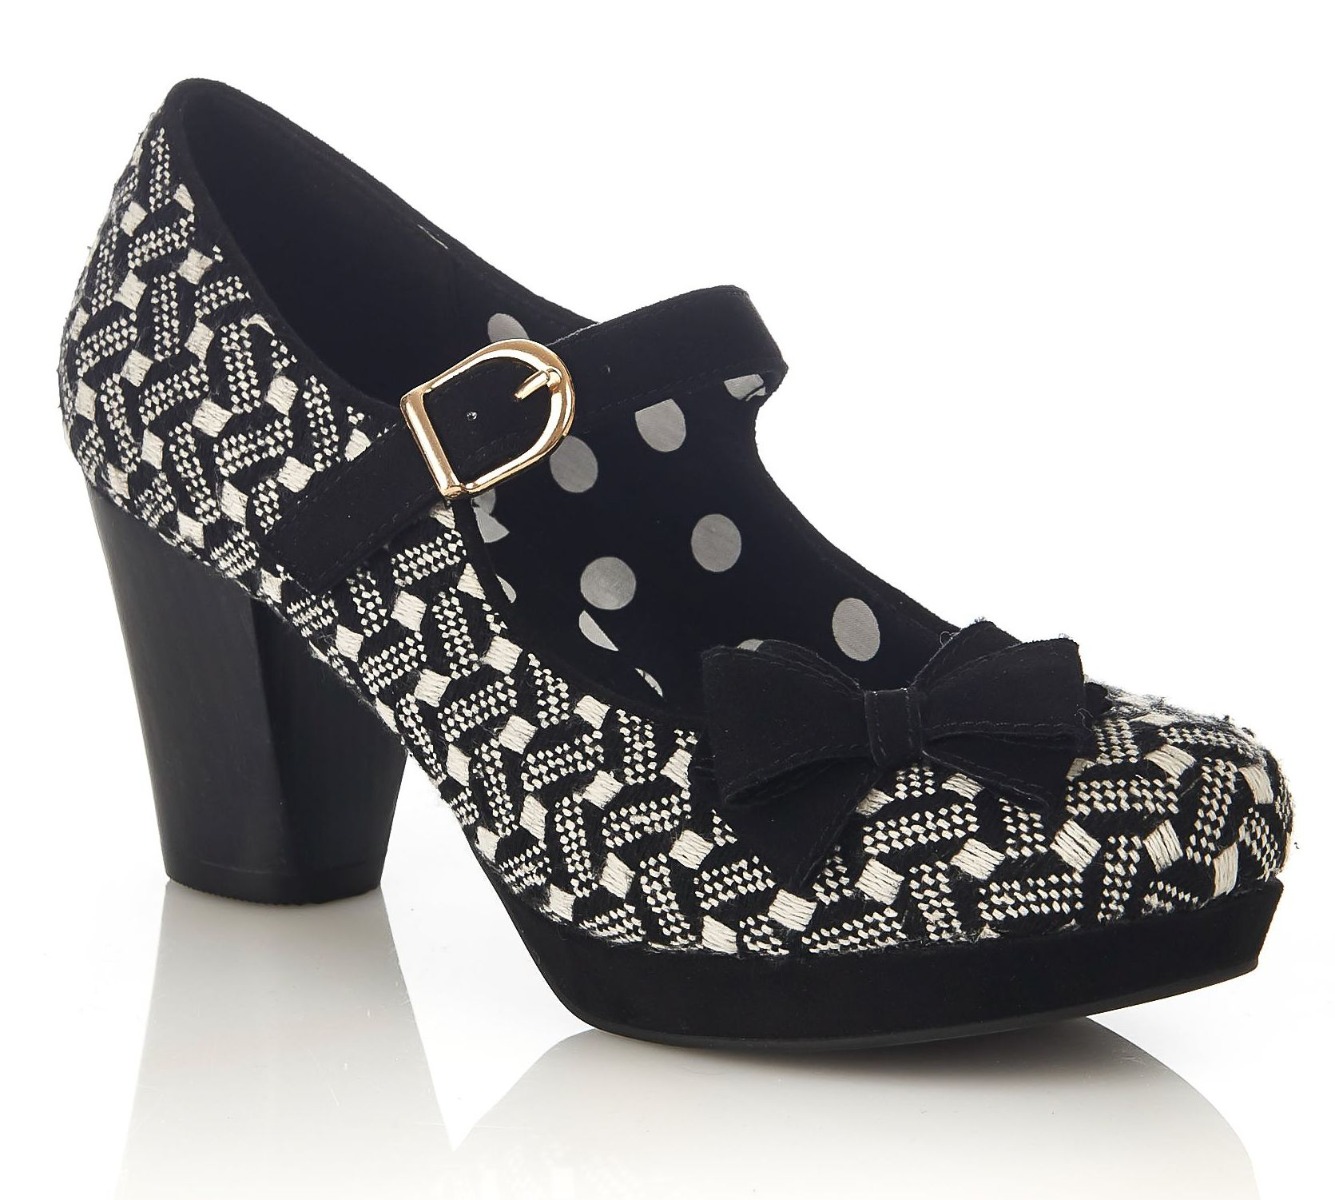 rs09224blbbb_chaussures-escarpins-pin-up-retro-50-s-glam-chic-crystal-noir